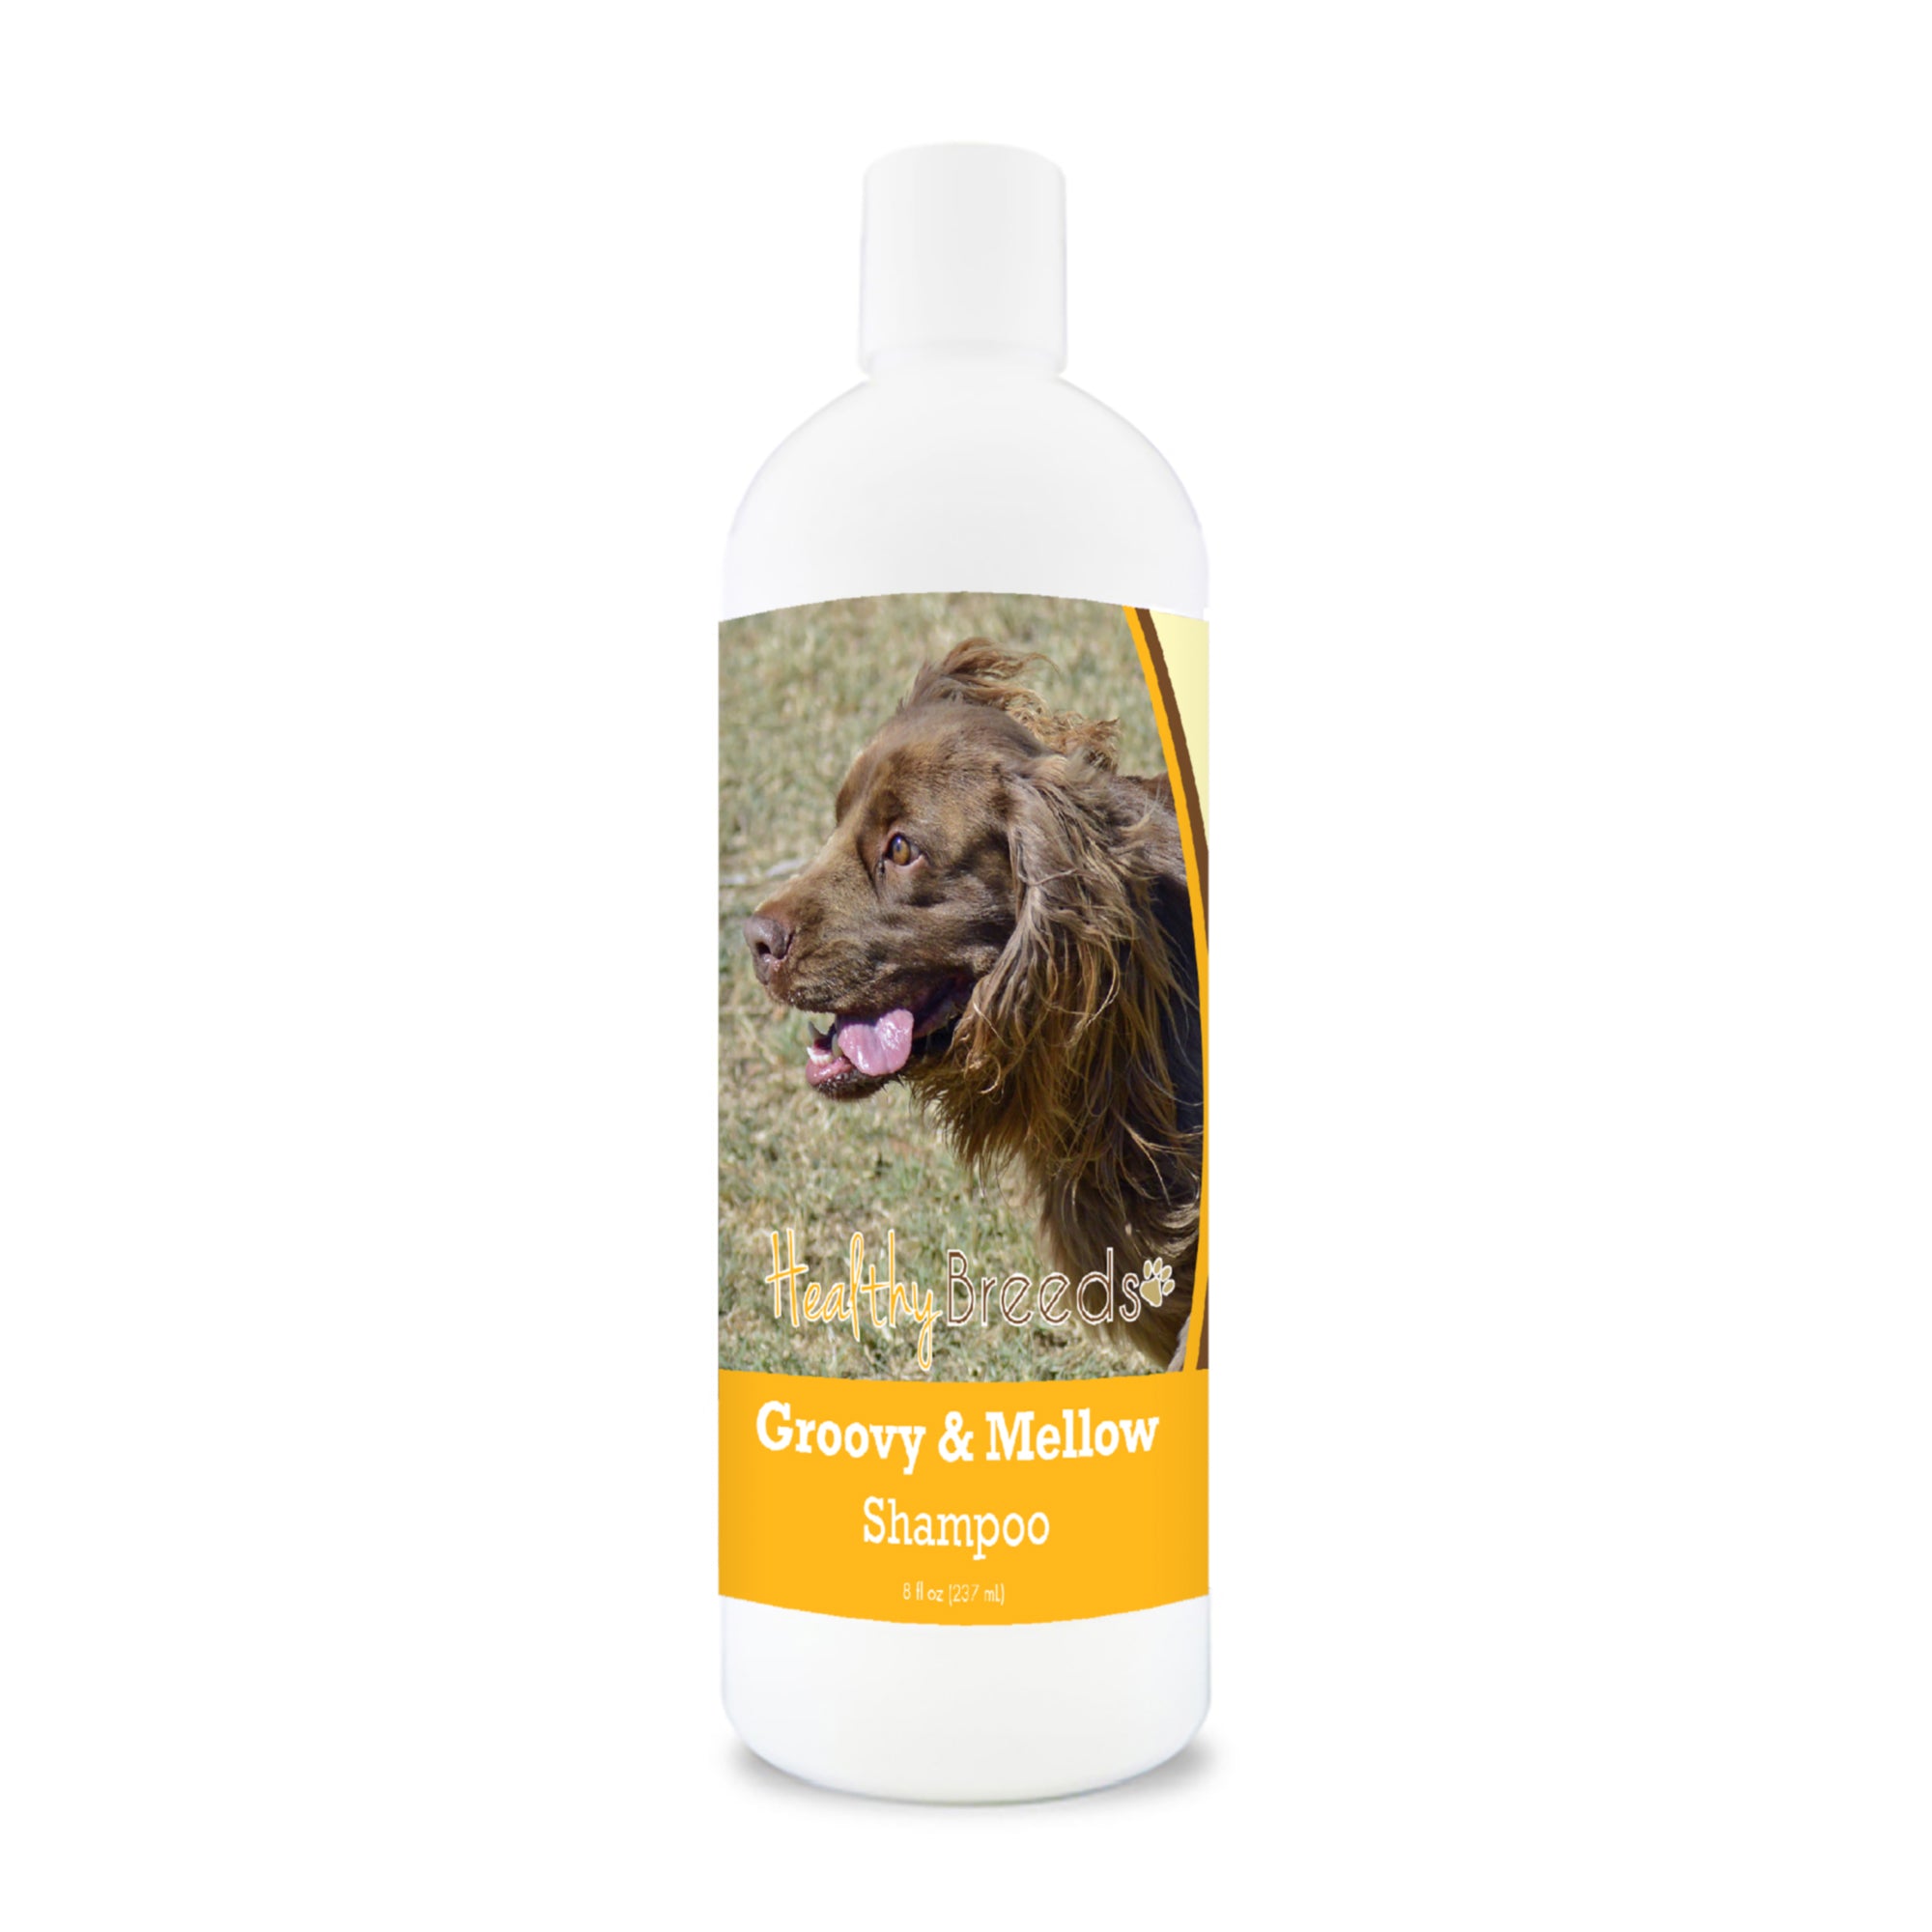 Sussex Spaniel Groovy & Mellow Shampoo 8 oz